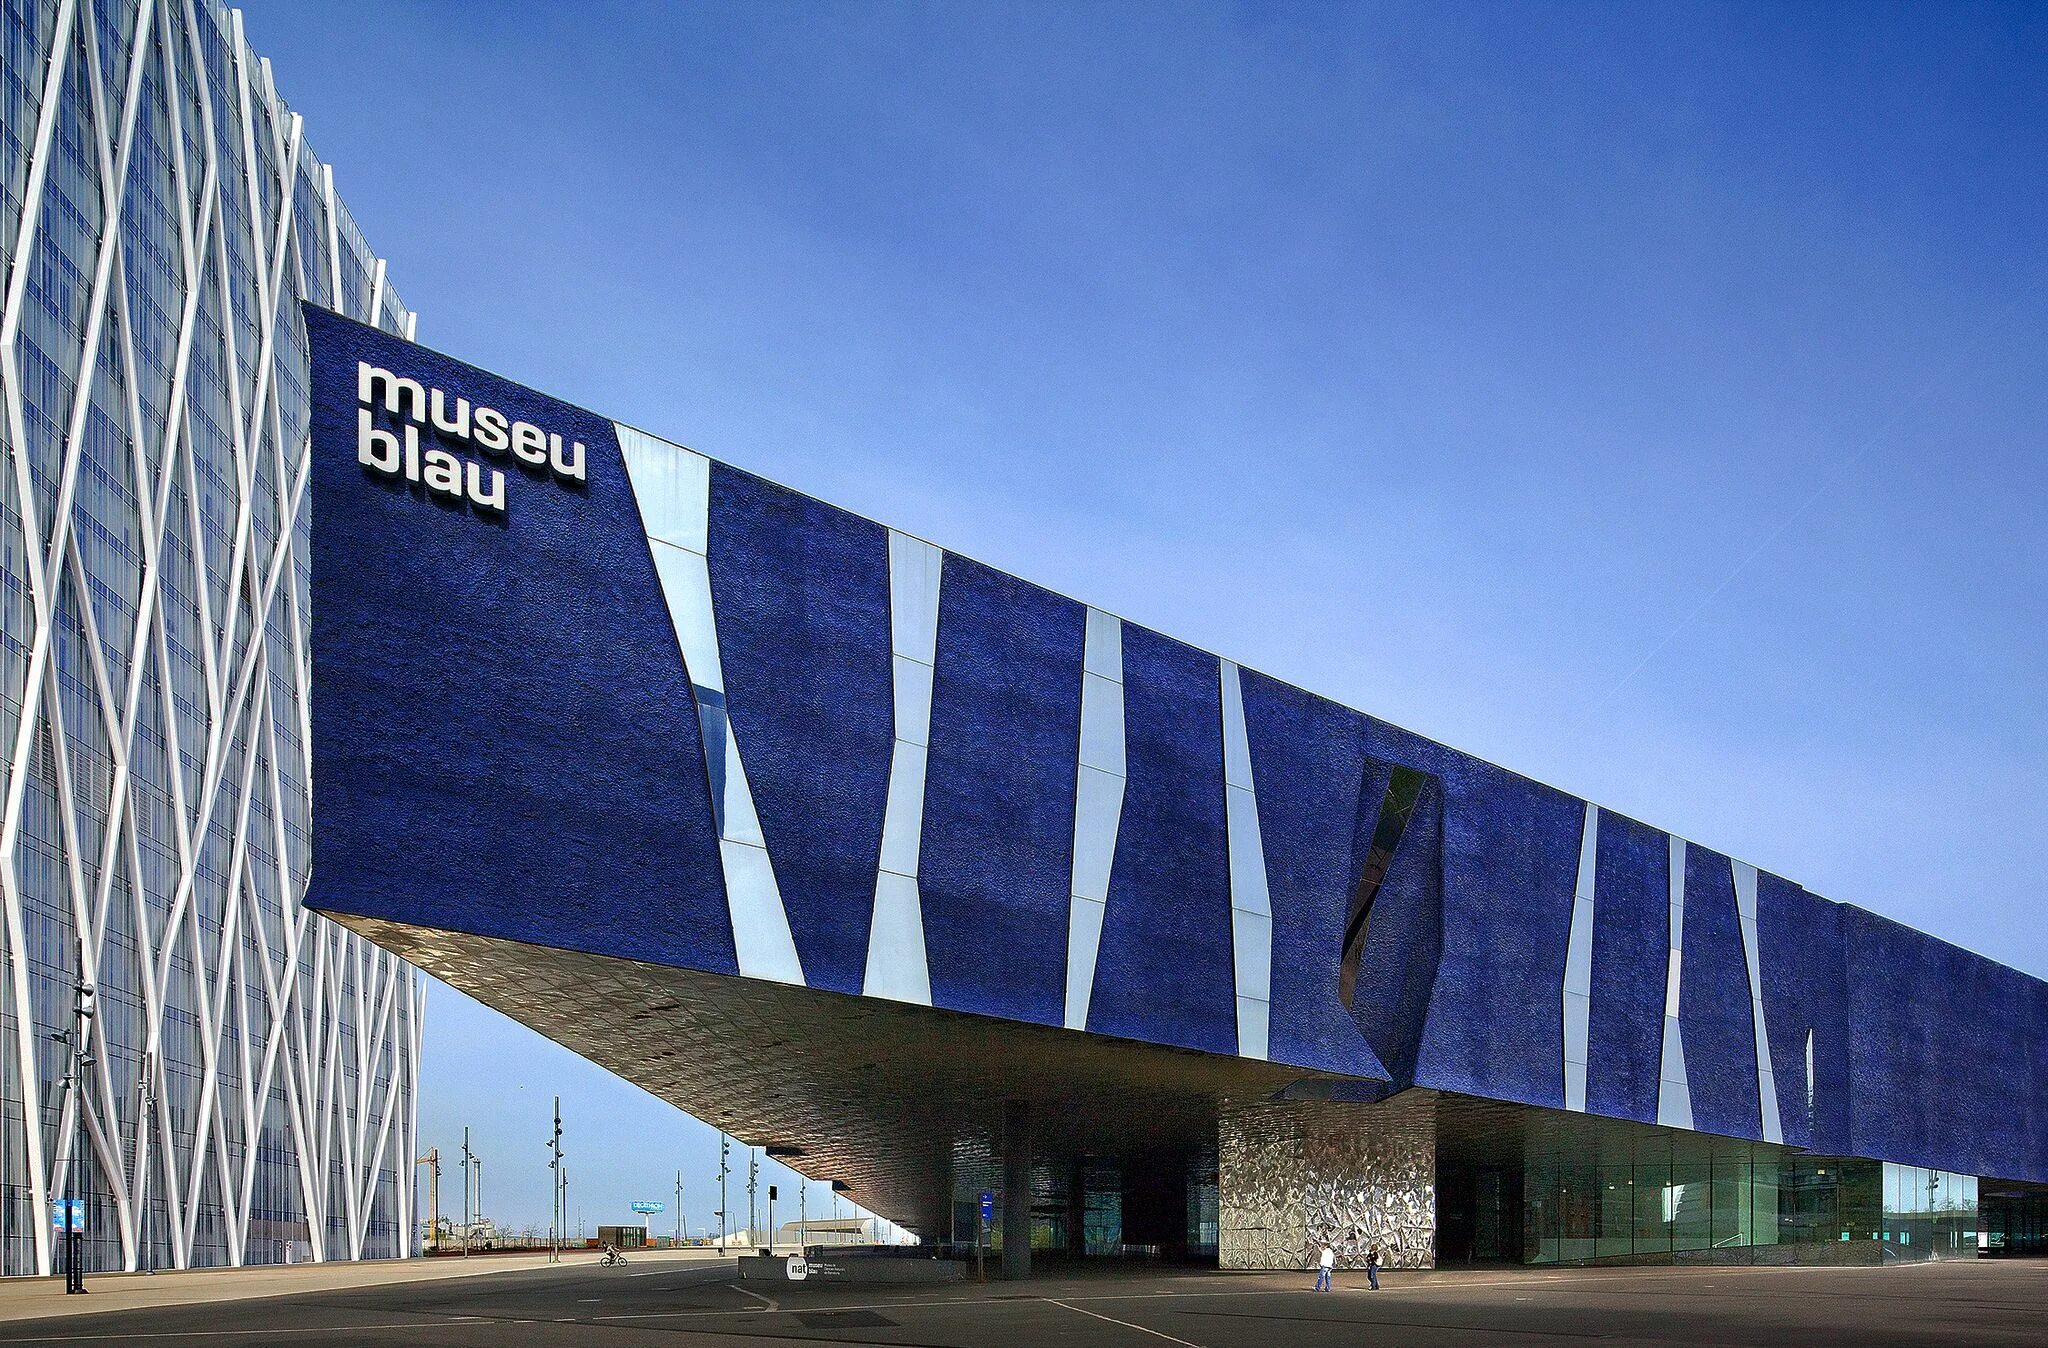 Форум фасадам. Музей Блау Museu Blau. Херцог де Мерон Барселона. Музей архитектуры в Барселоне. Герцог де Мерон архитектура.